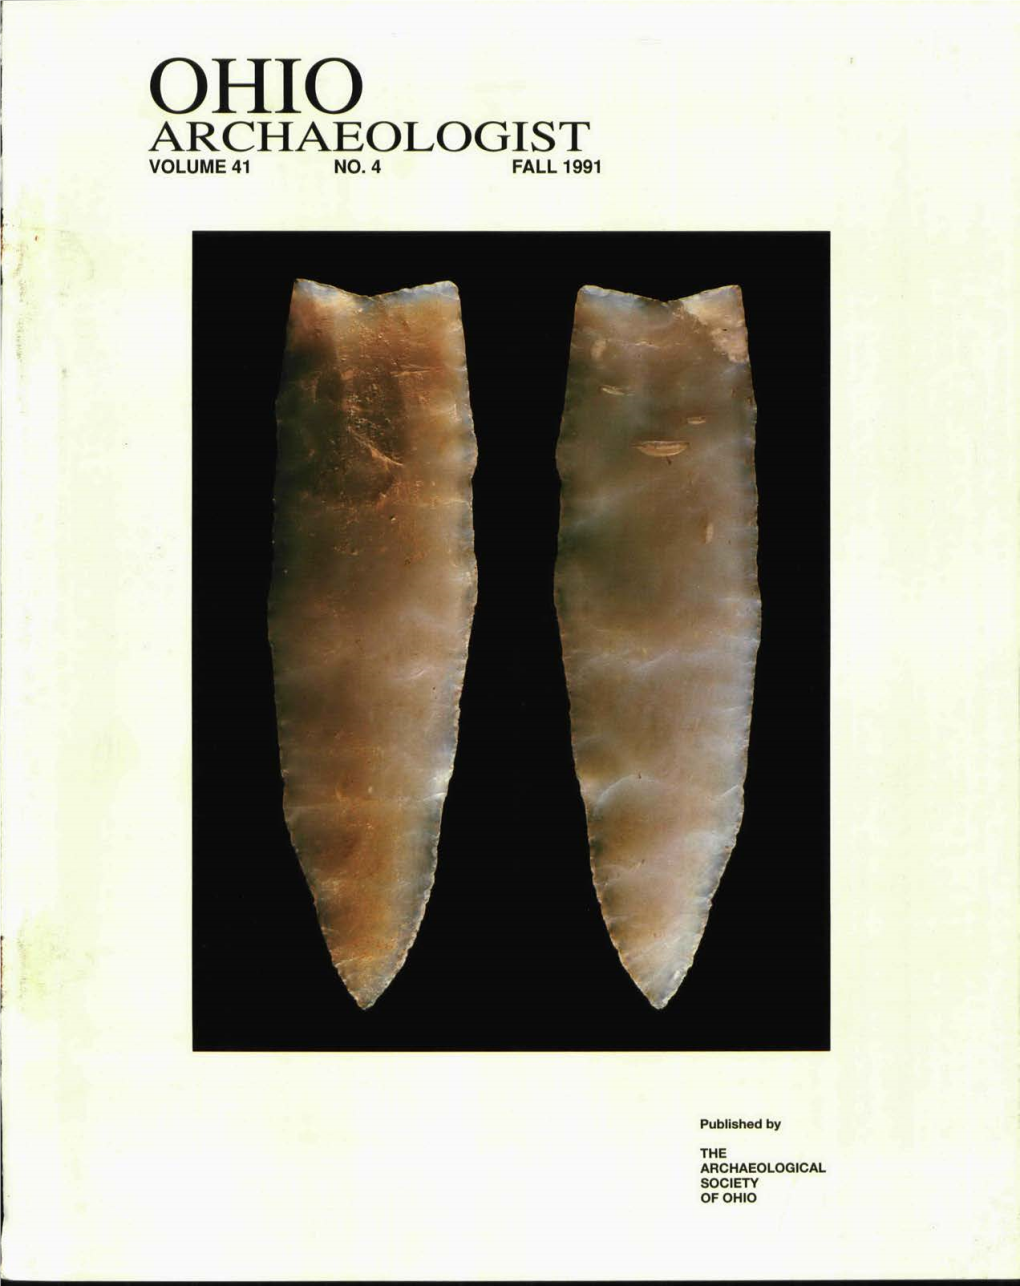 Archaeologist Volume 41 No